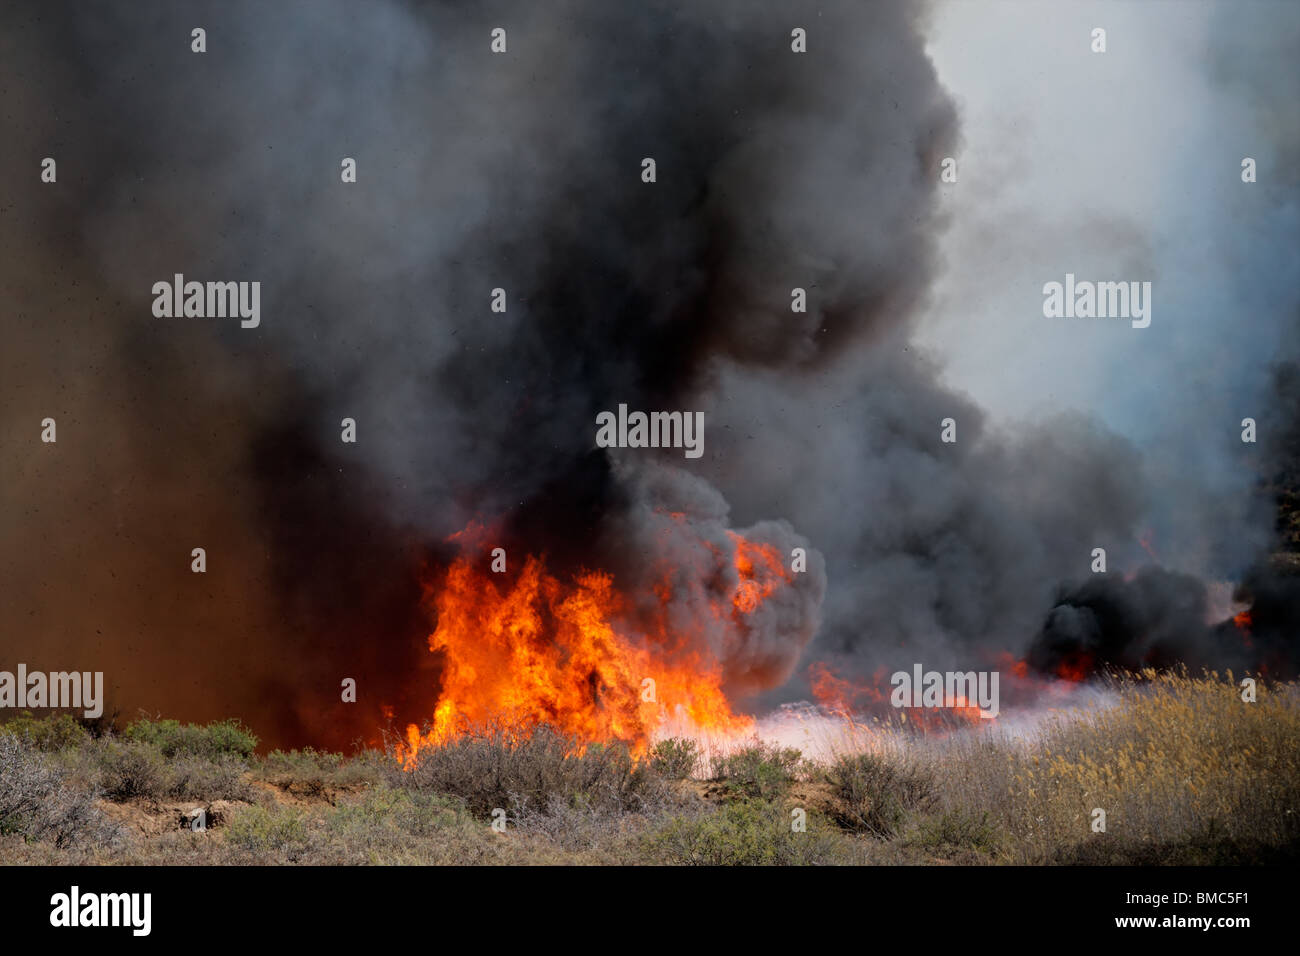 Fierce brushfire with flames and black smoke Stock Photo